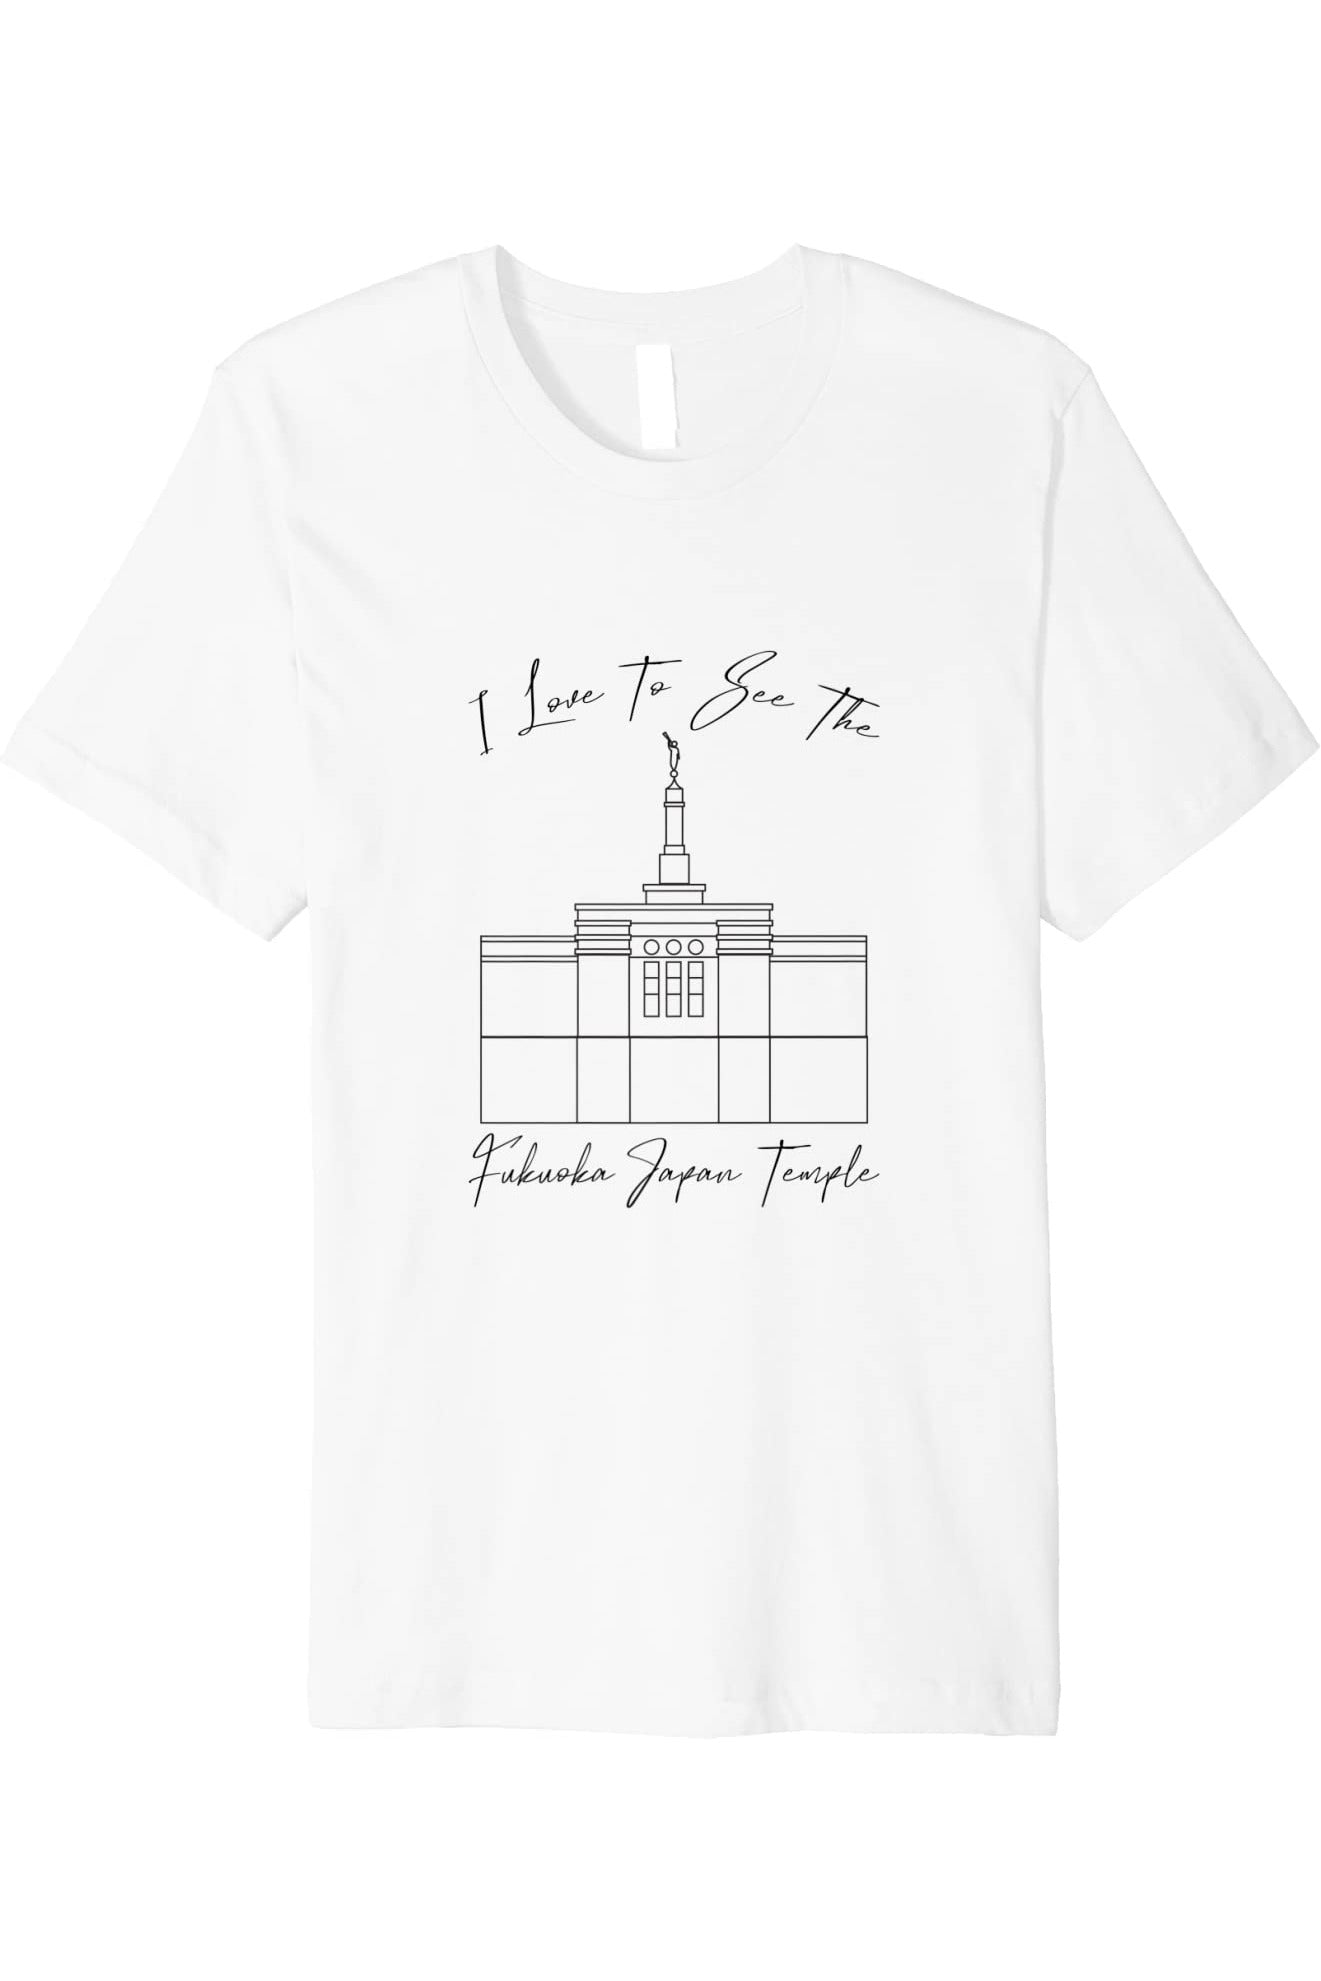 Fukuoka Japan Temple T-Shirt - Premium - Calligraphy Style (English) US